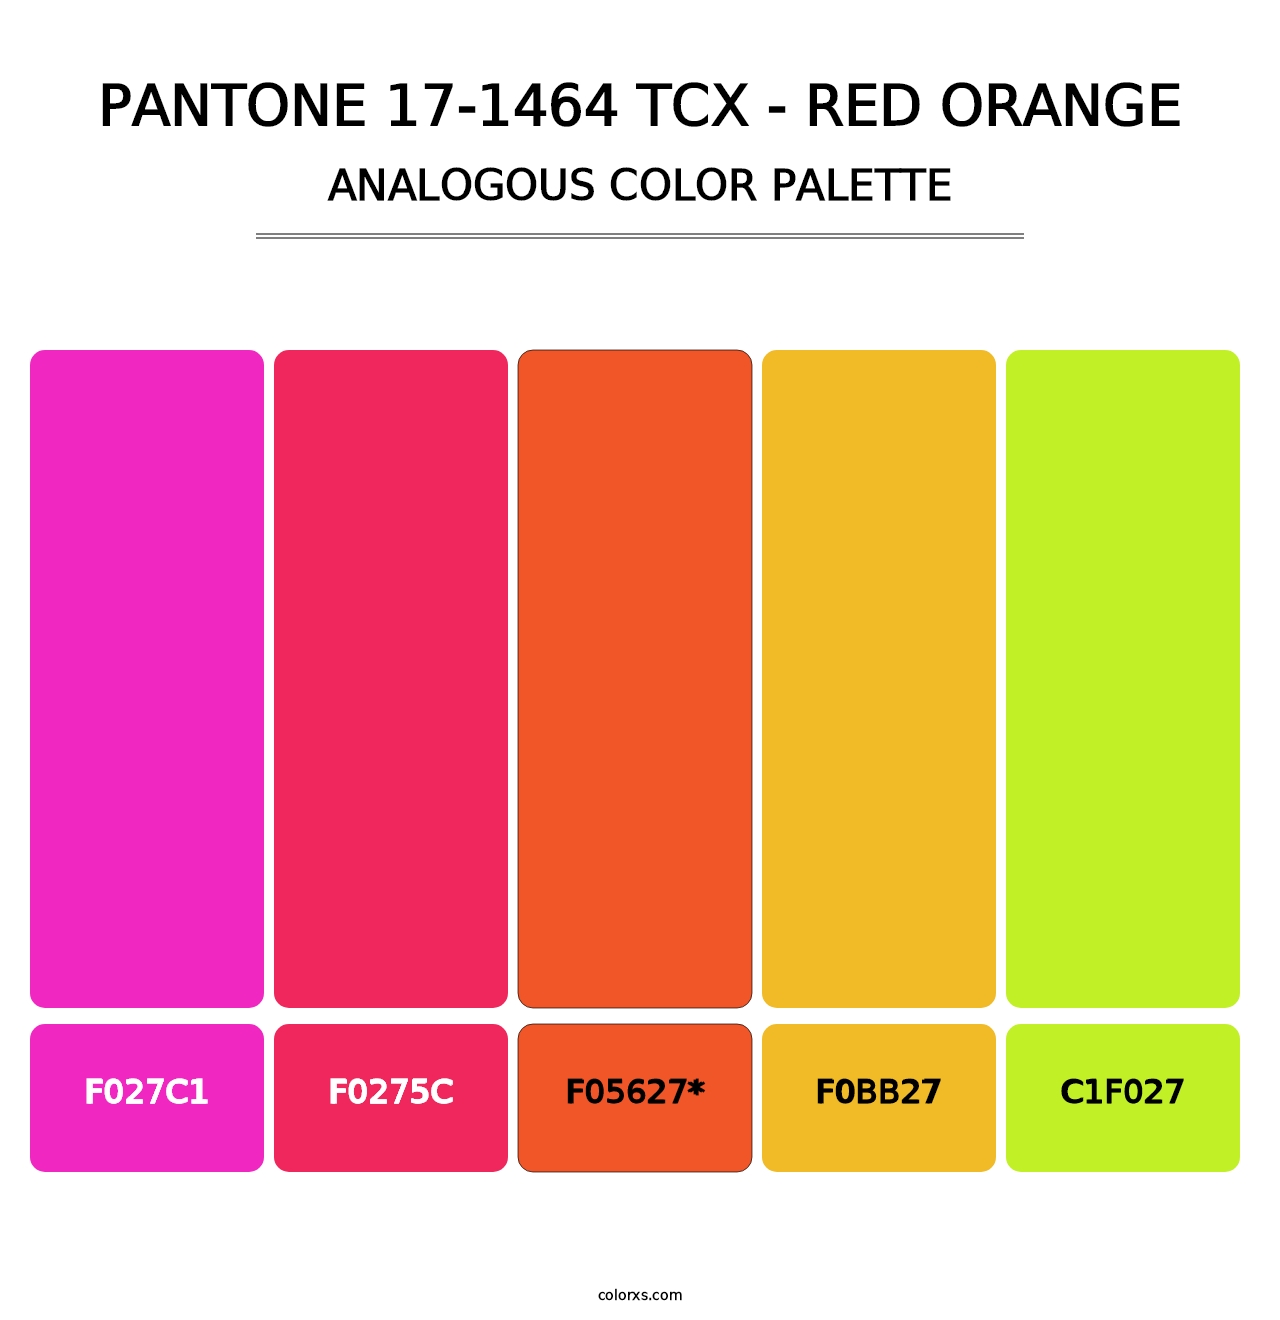 PANTONE 17-1464 TCX - Red Orange - Analogous Color Palette